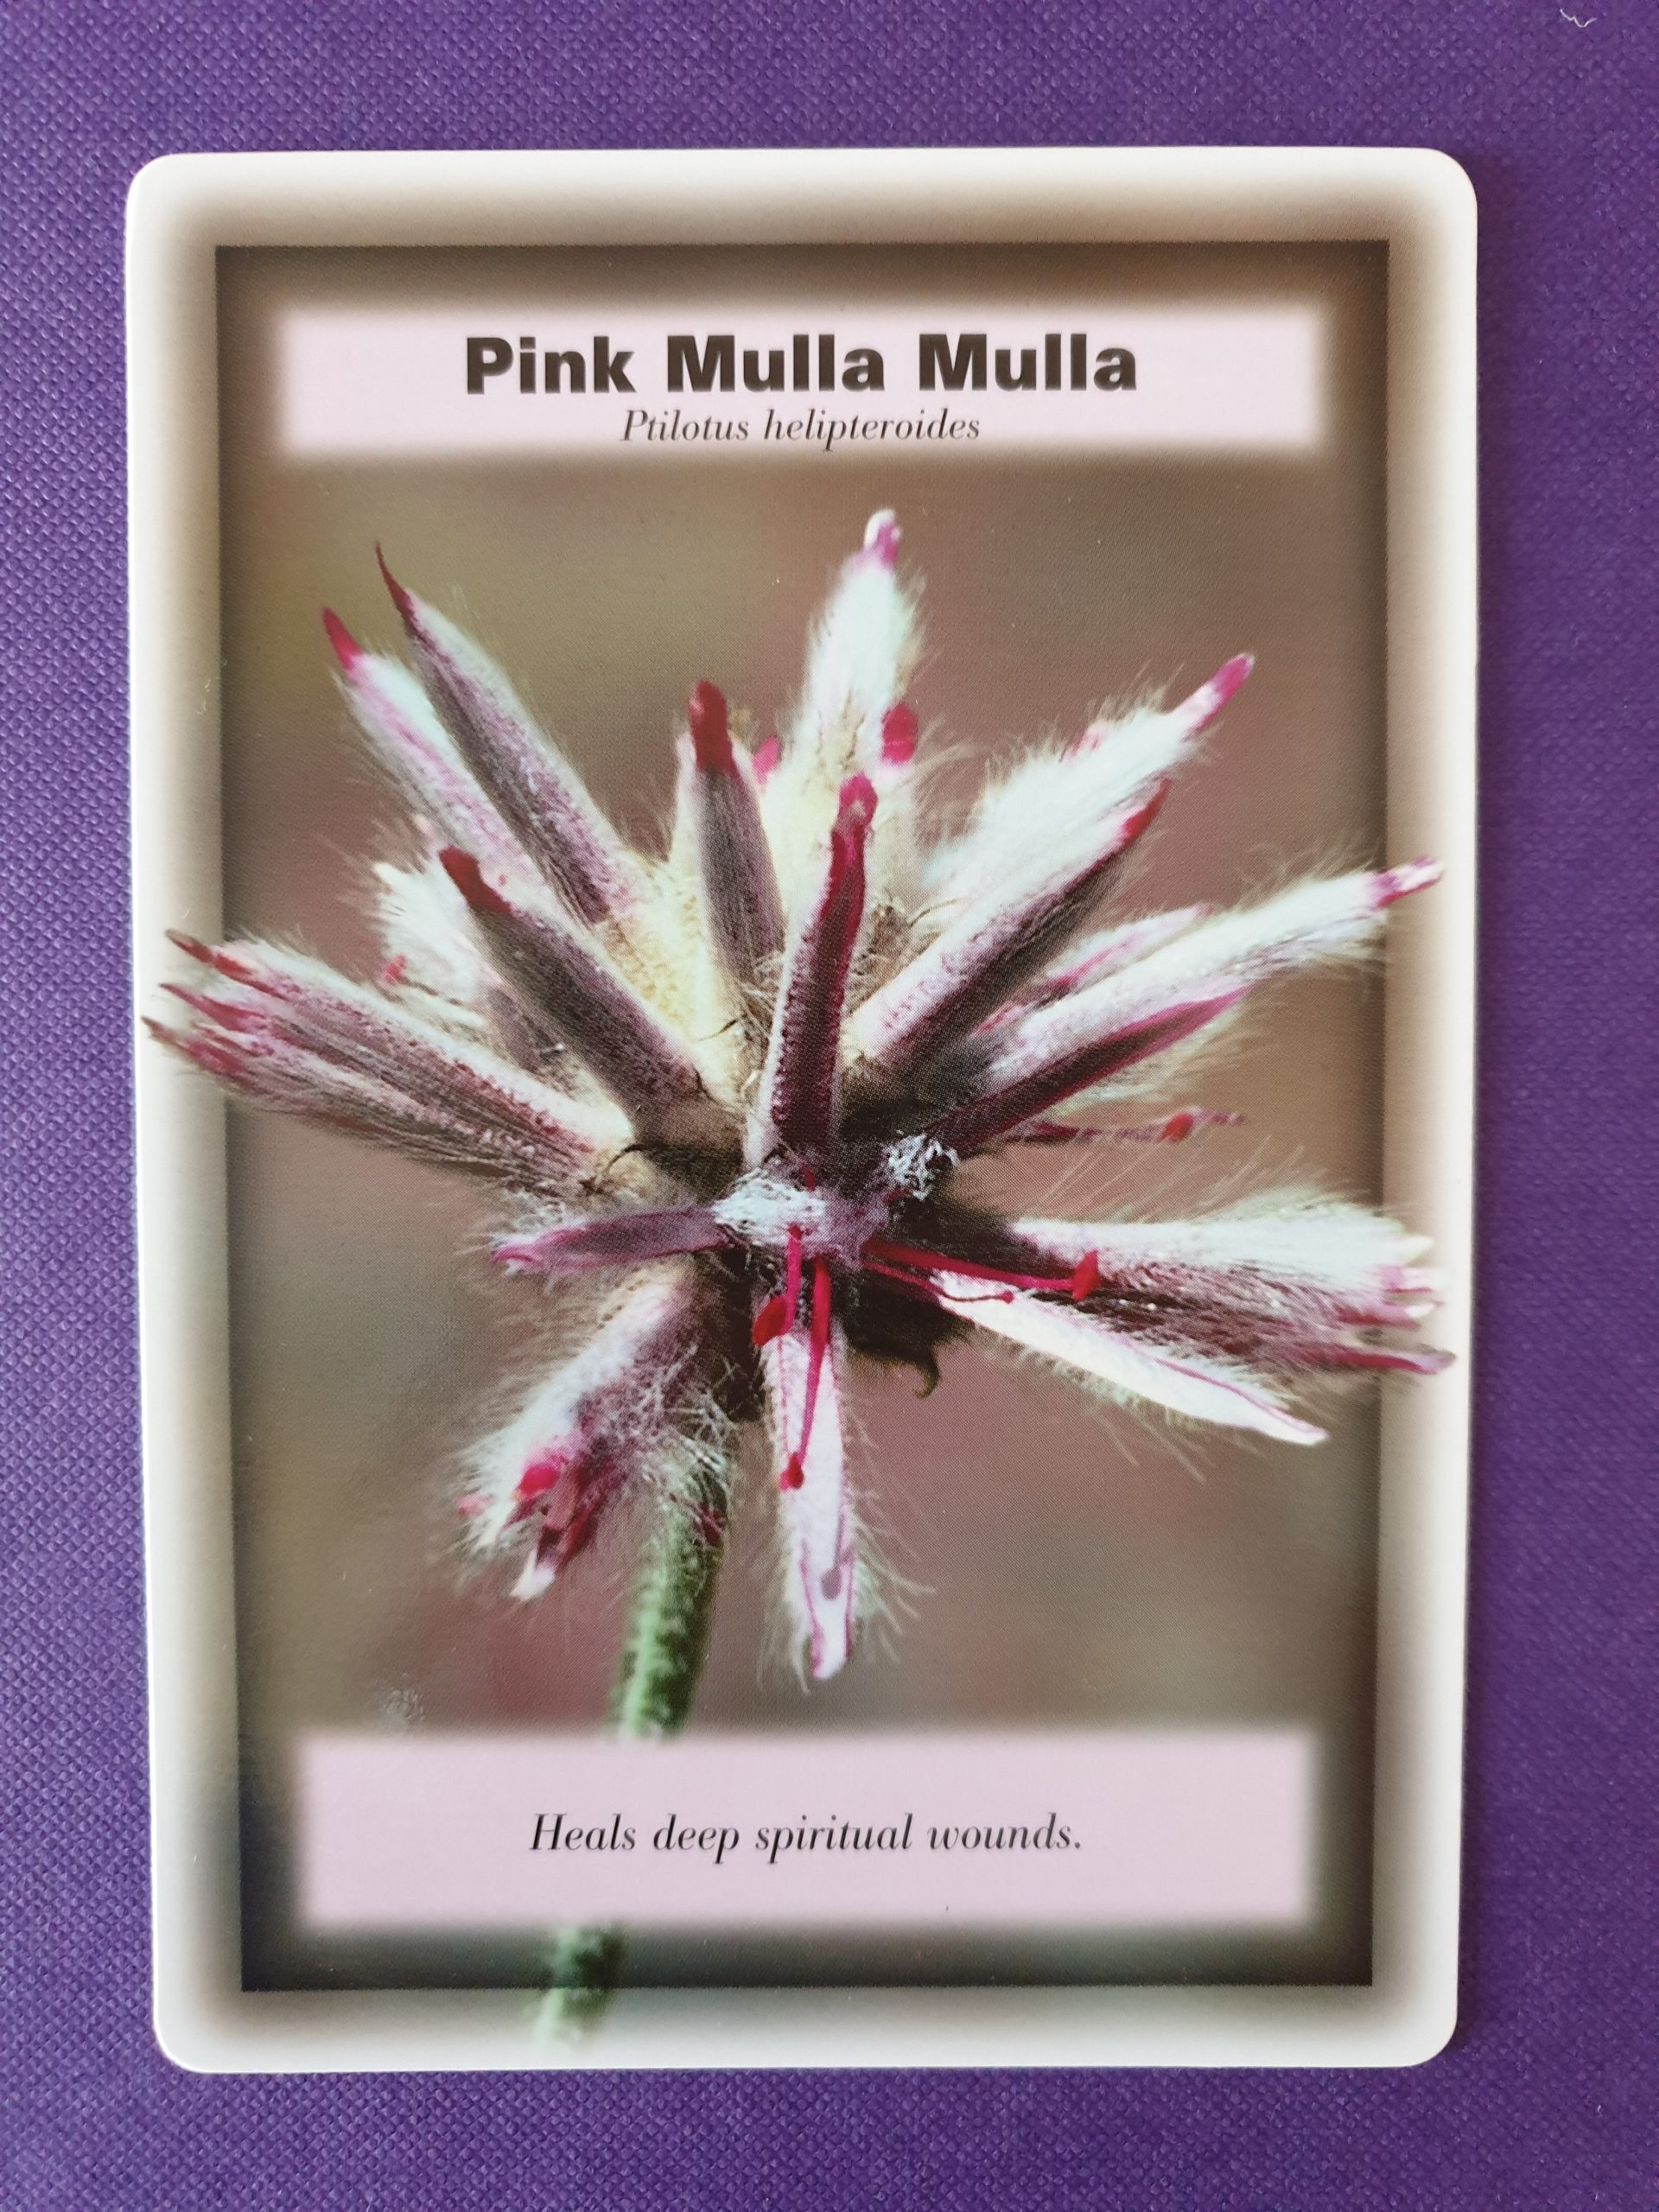 Pink Mulla Mulla Midlands Kinesiology